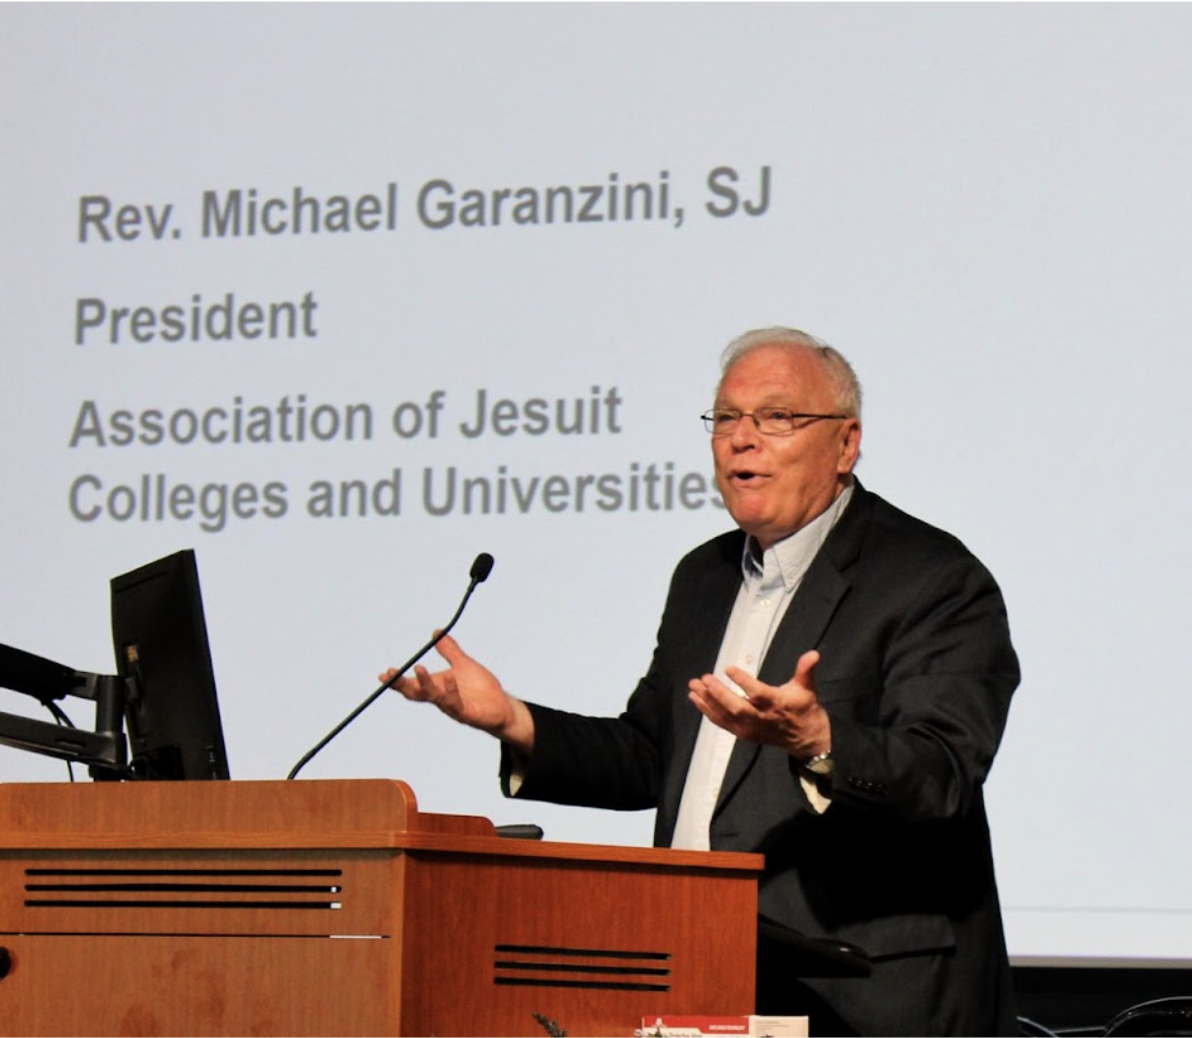 Rev. Michael Garanzini, SJ speaking